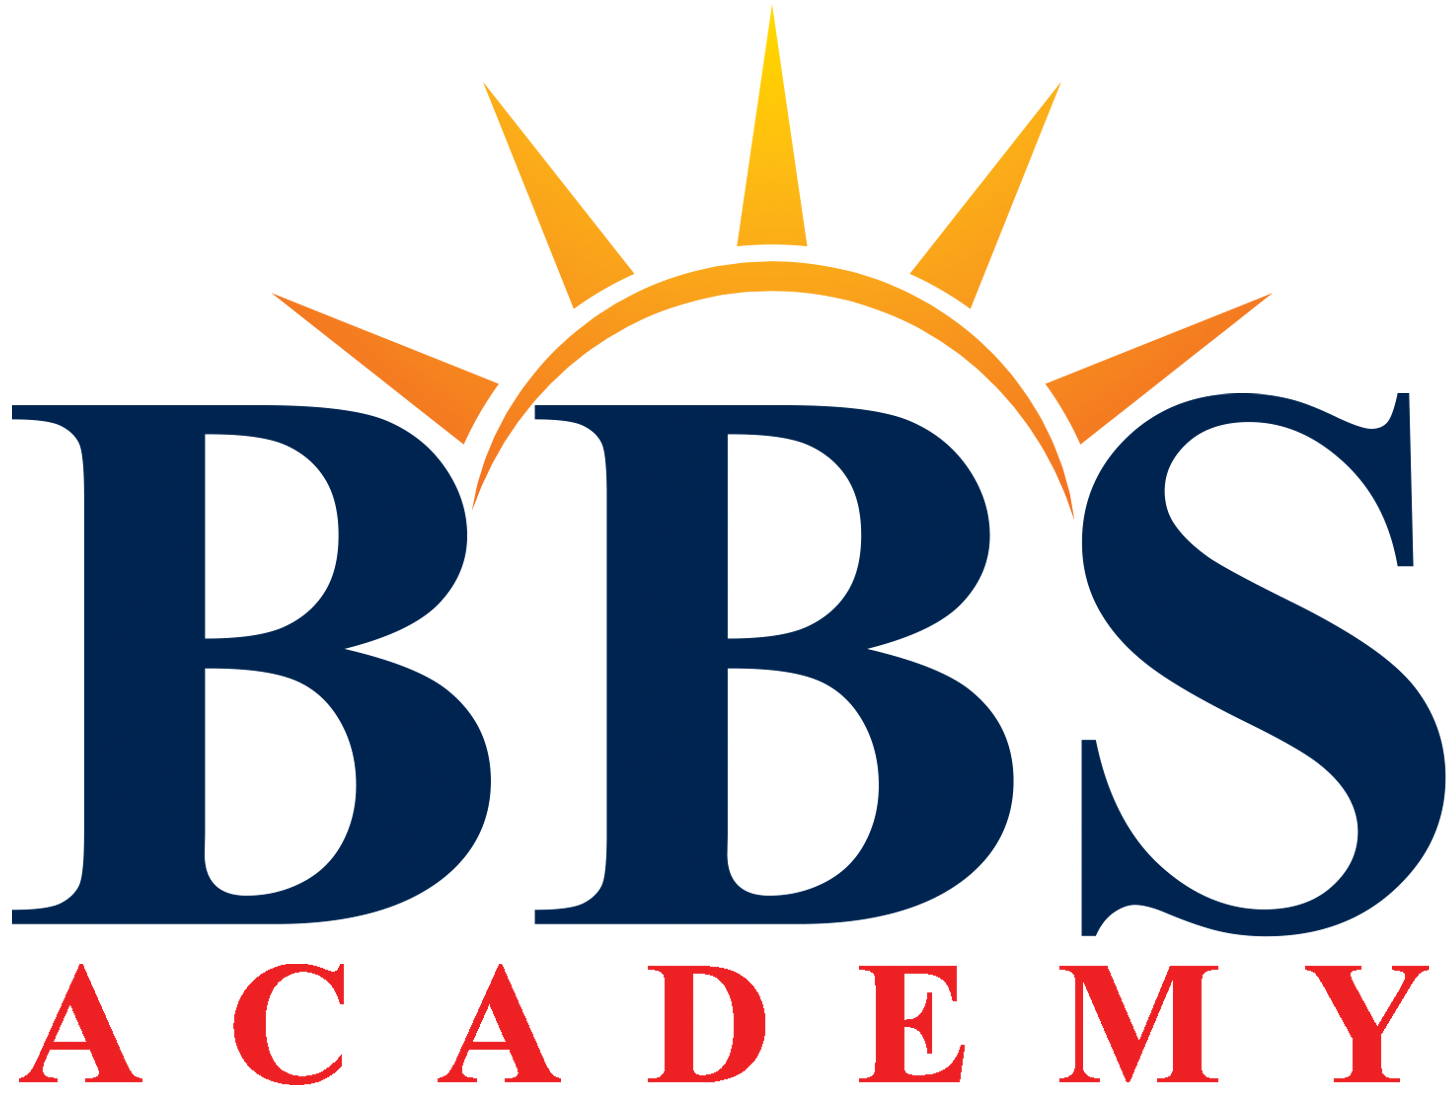 BBS ACADEMY|Schools|Education